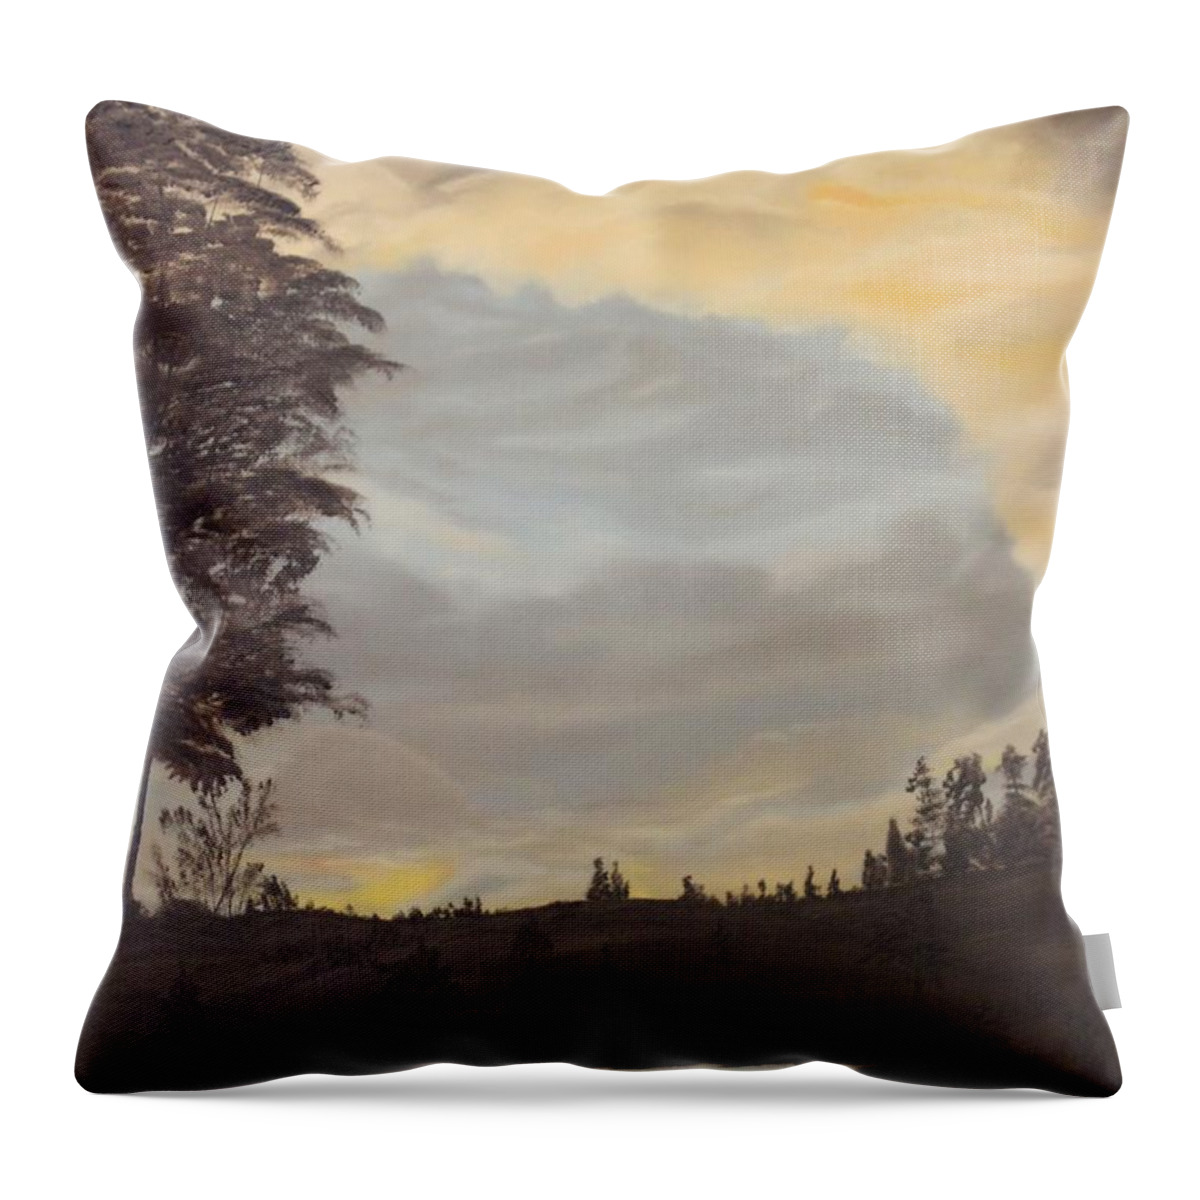 Landscape Throw Pillow featuring the painting Evening Run by Berlynn